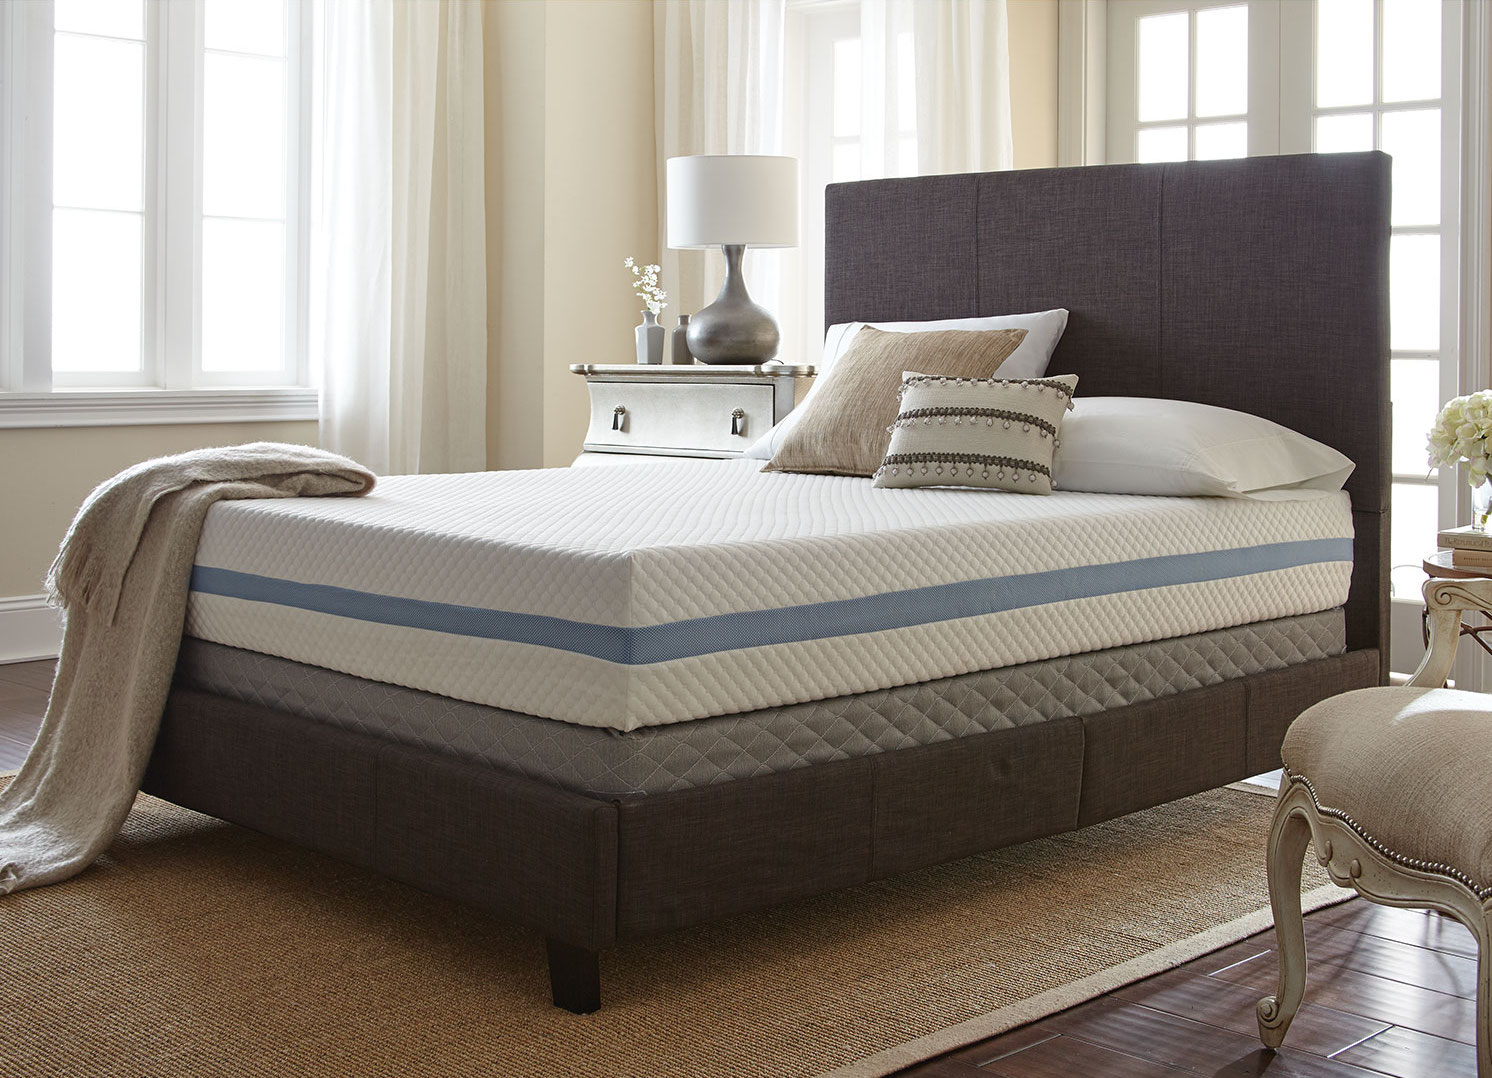 mattress buying guide - simple sleep gel memory foam mattress